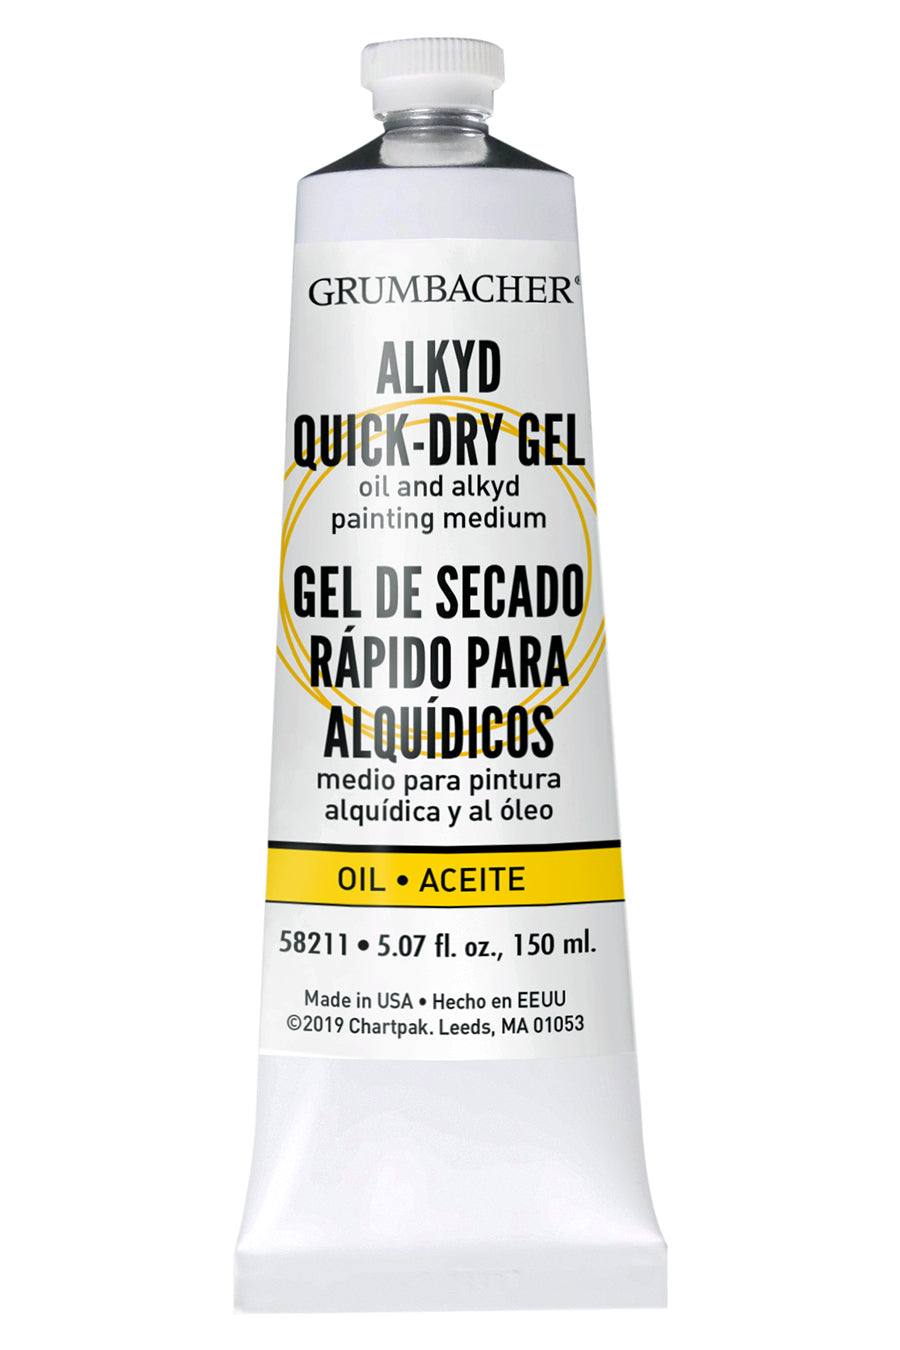 Grumbacher Alkyd Quick-Dry Gel, 150ml